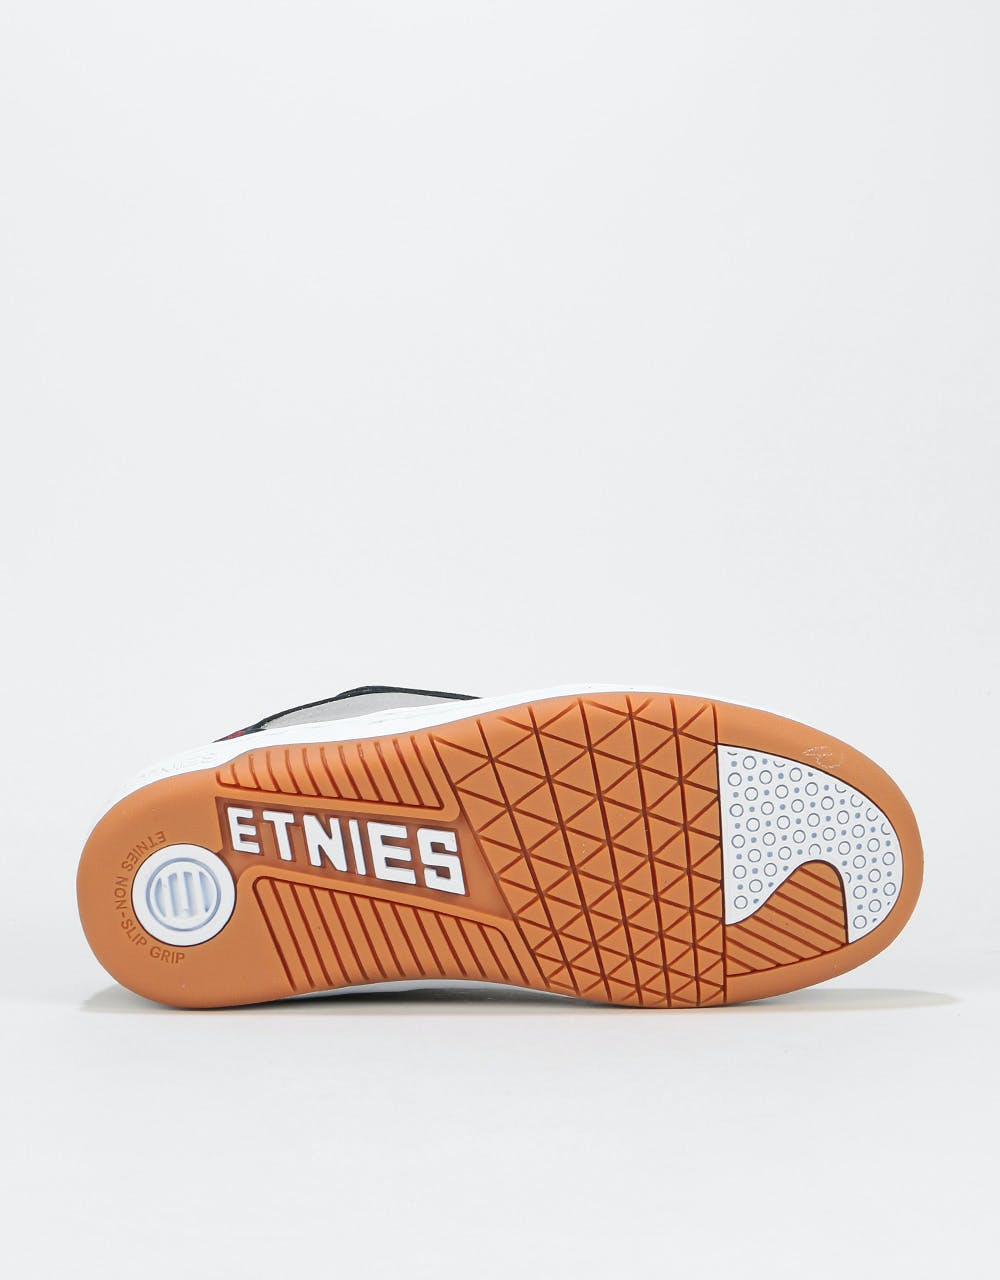 Etnies Czar Skate Shoes - Navy/Grey